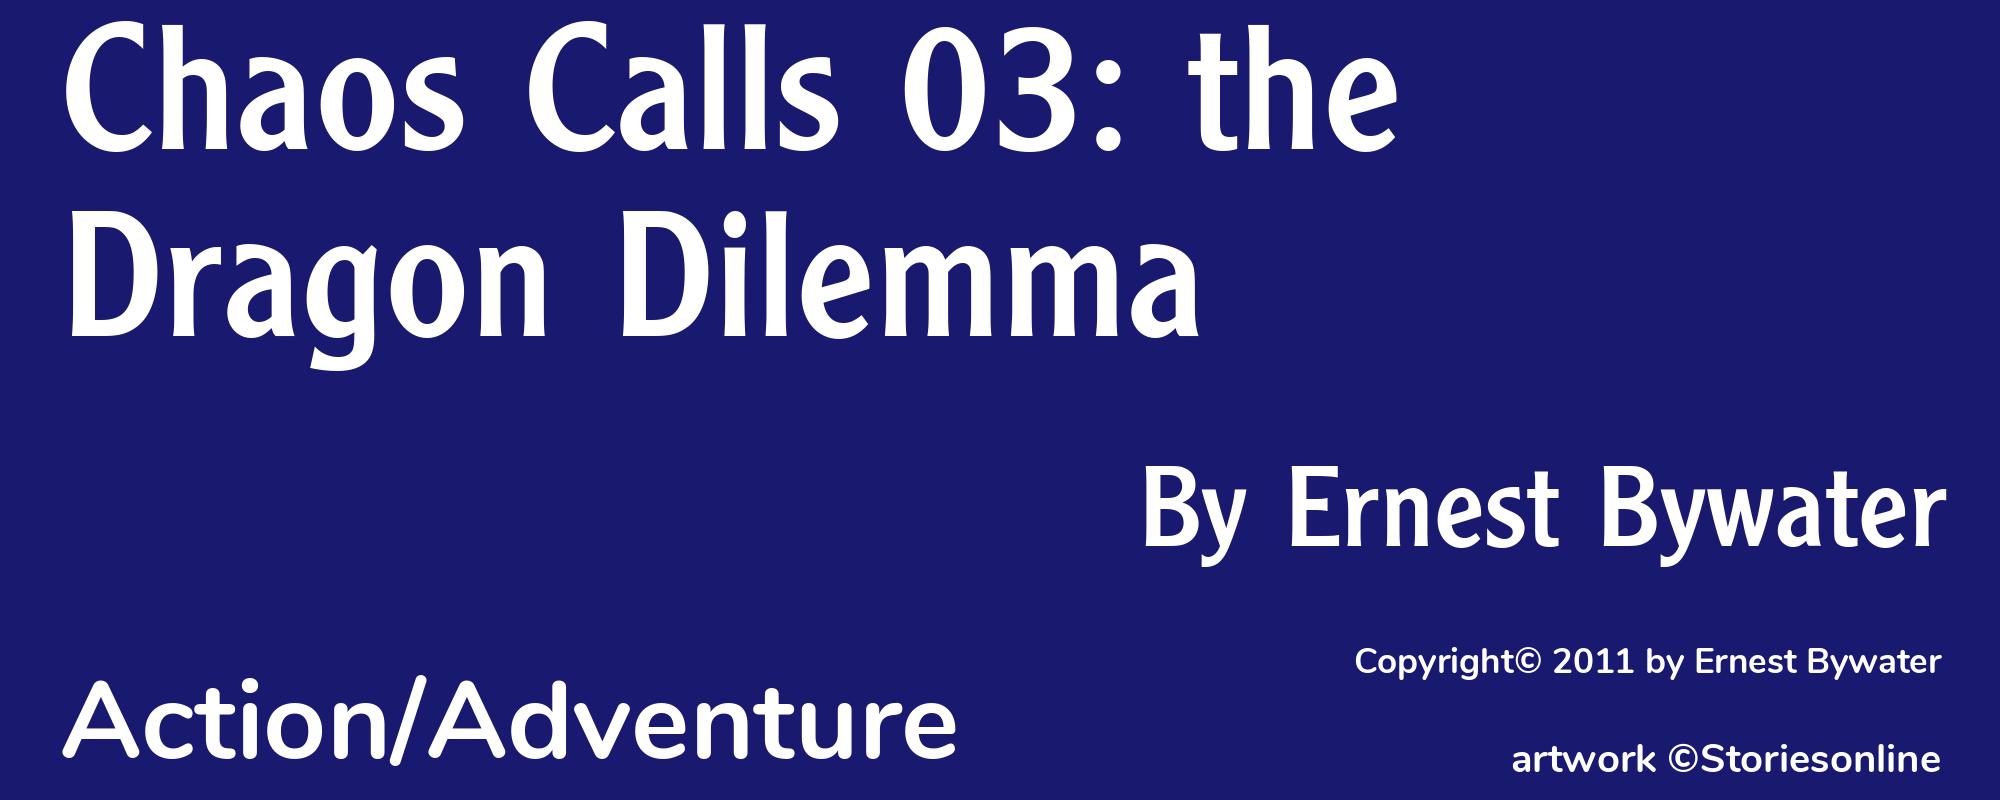 Chaos Calls 03: the Dragon Dilemma - Cover